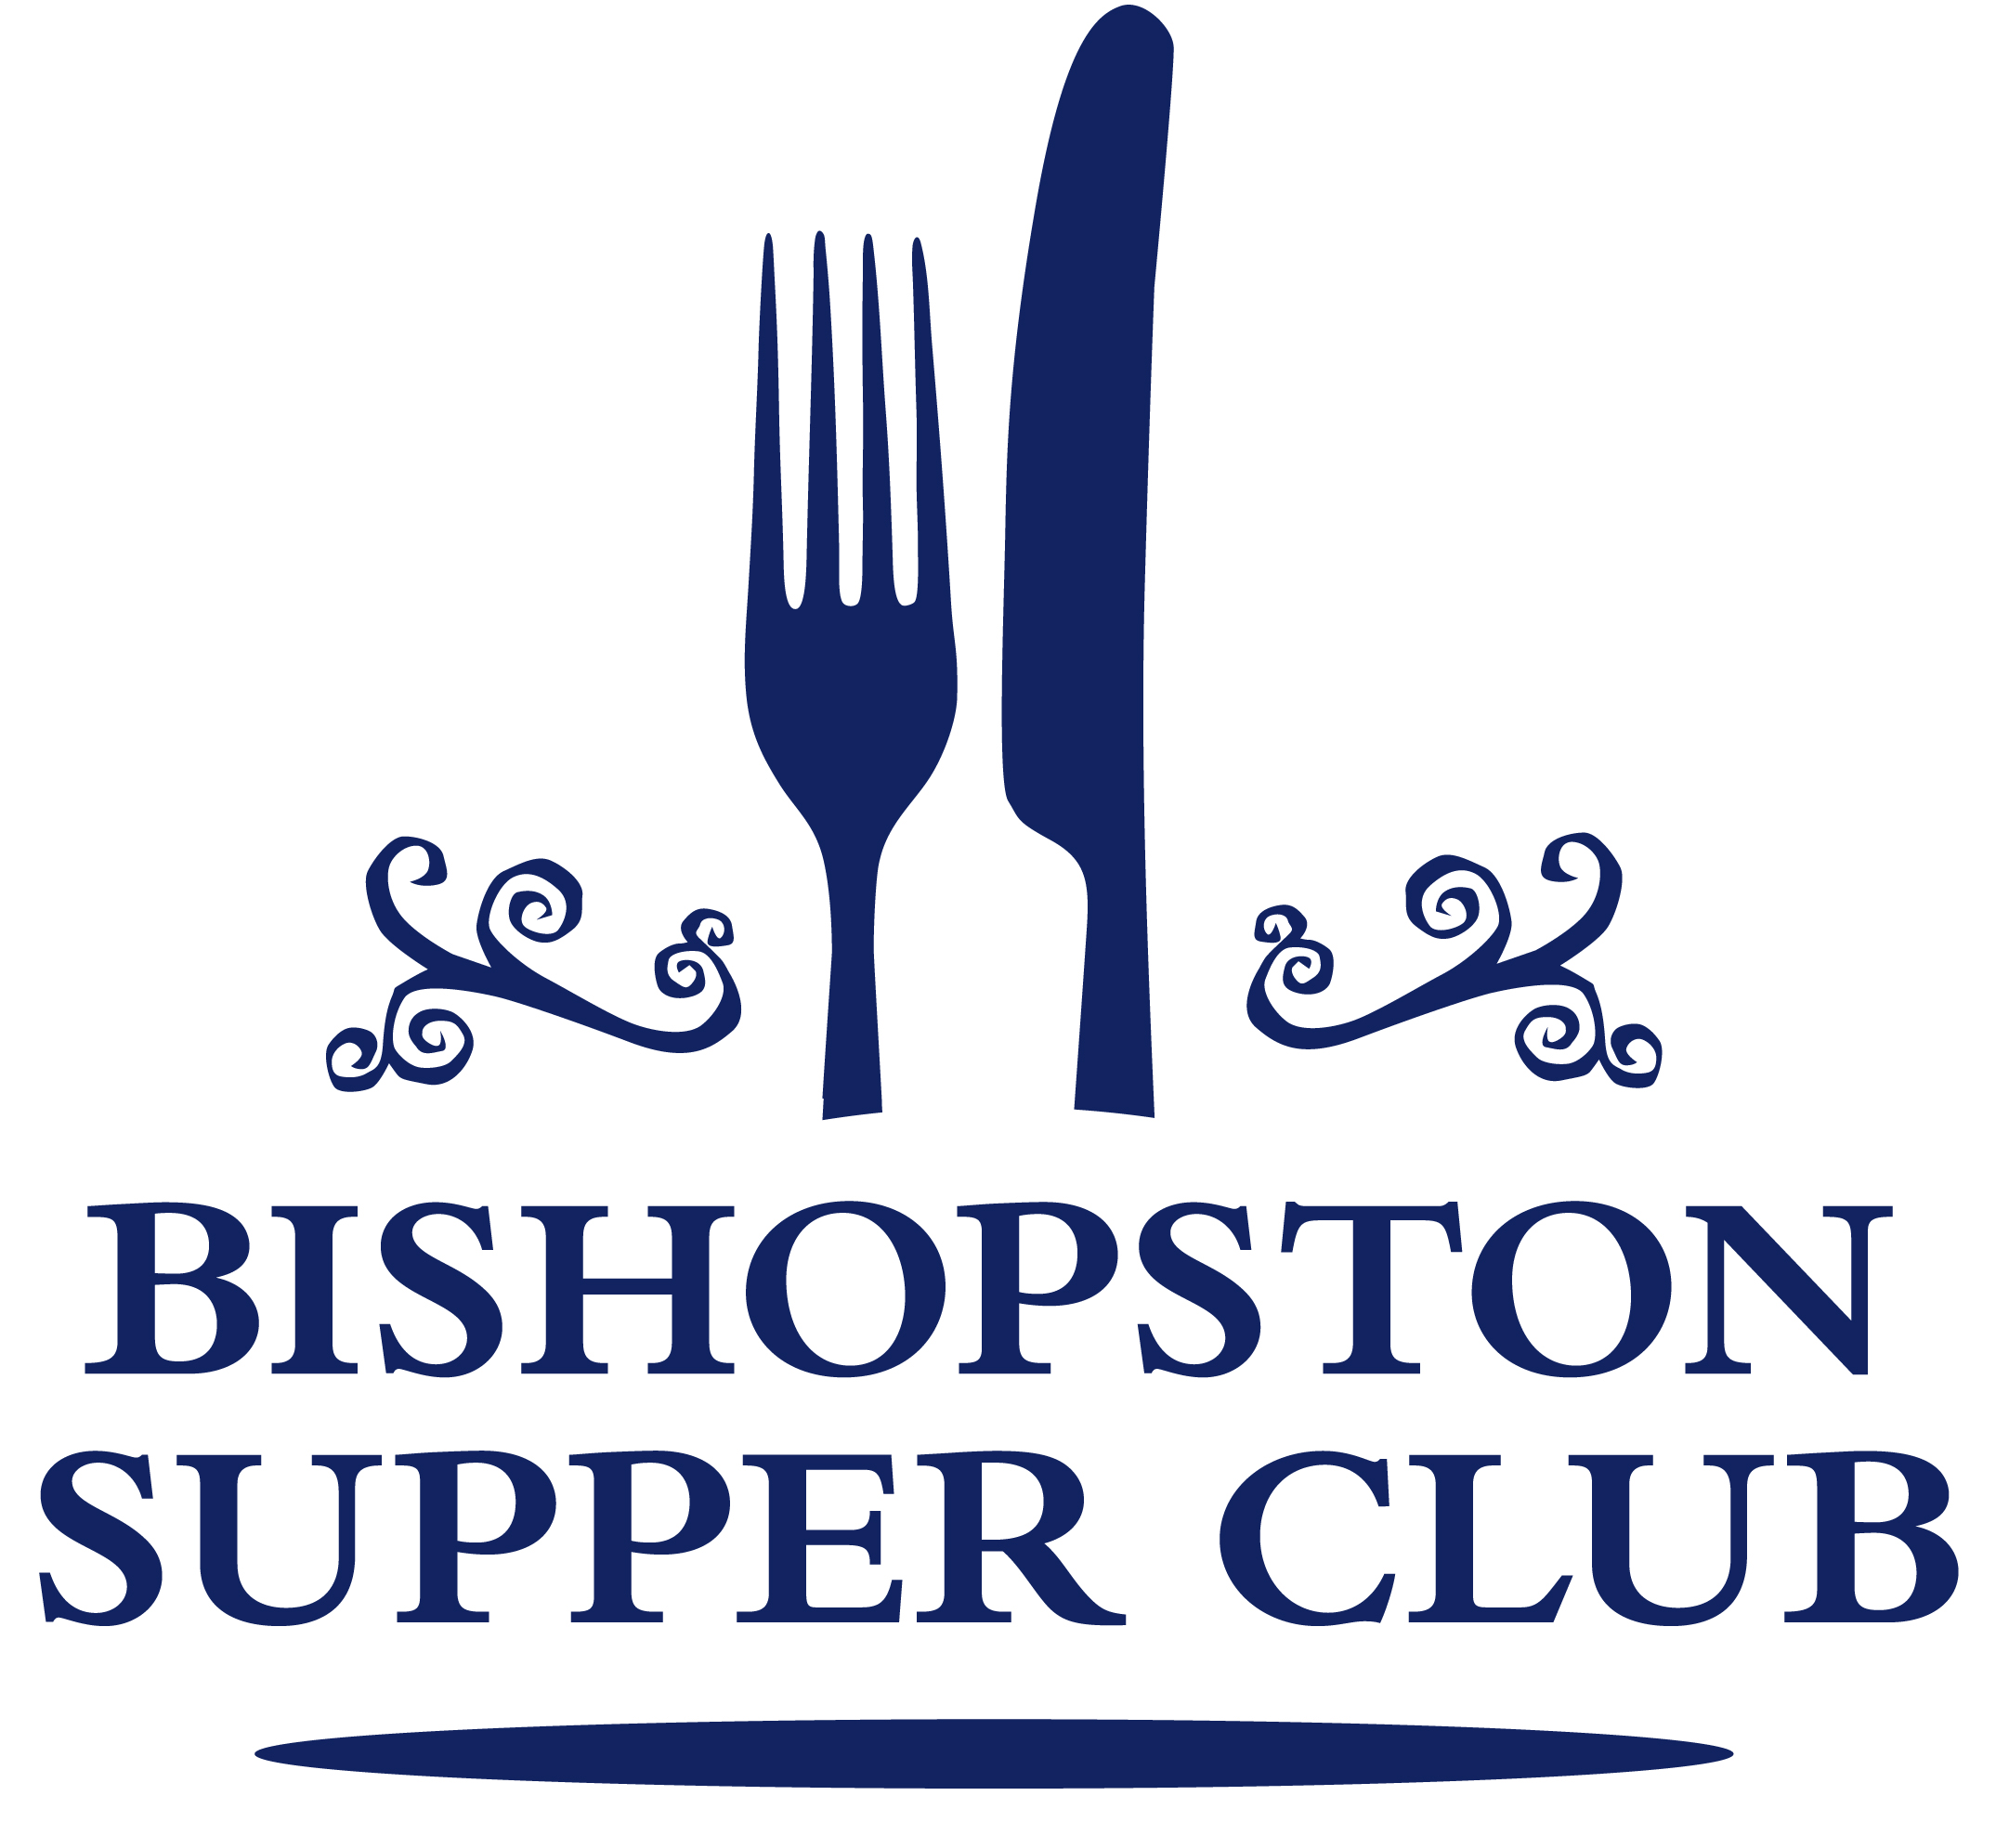 Bishopston supper club logo high res.jpg